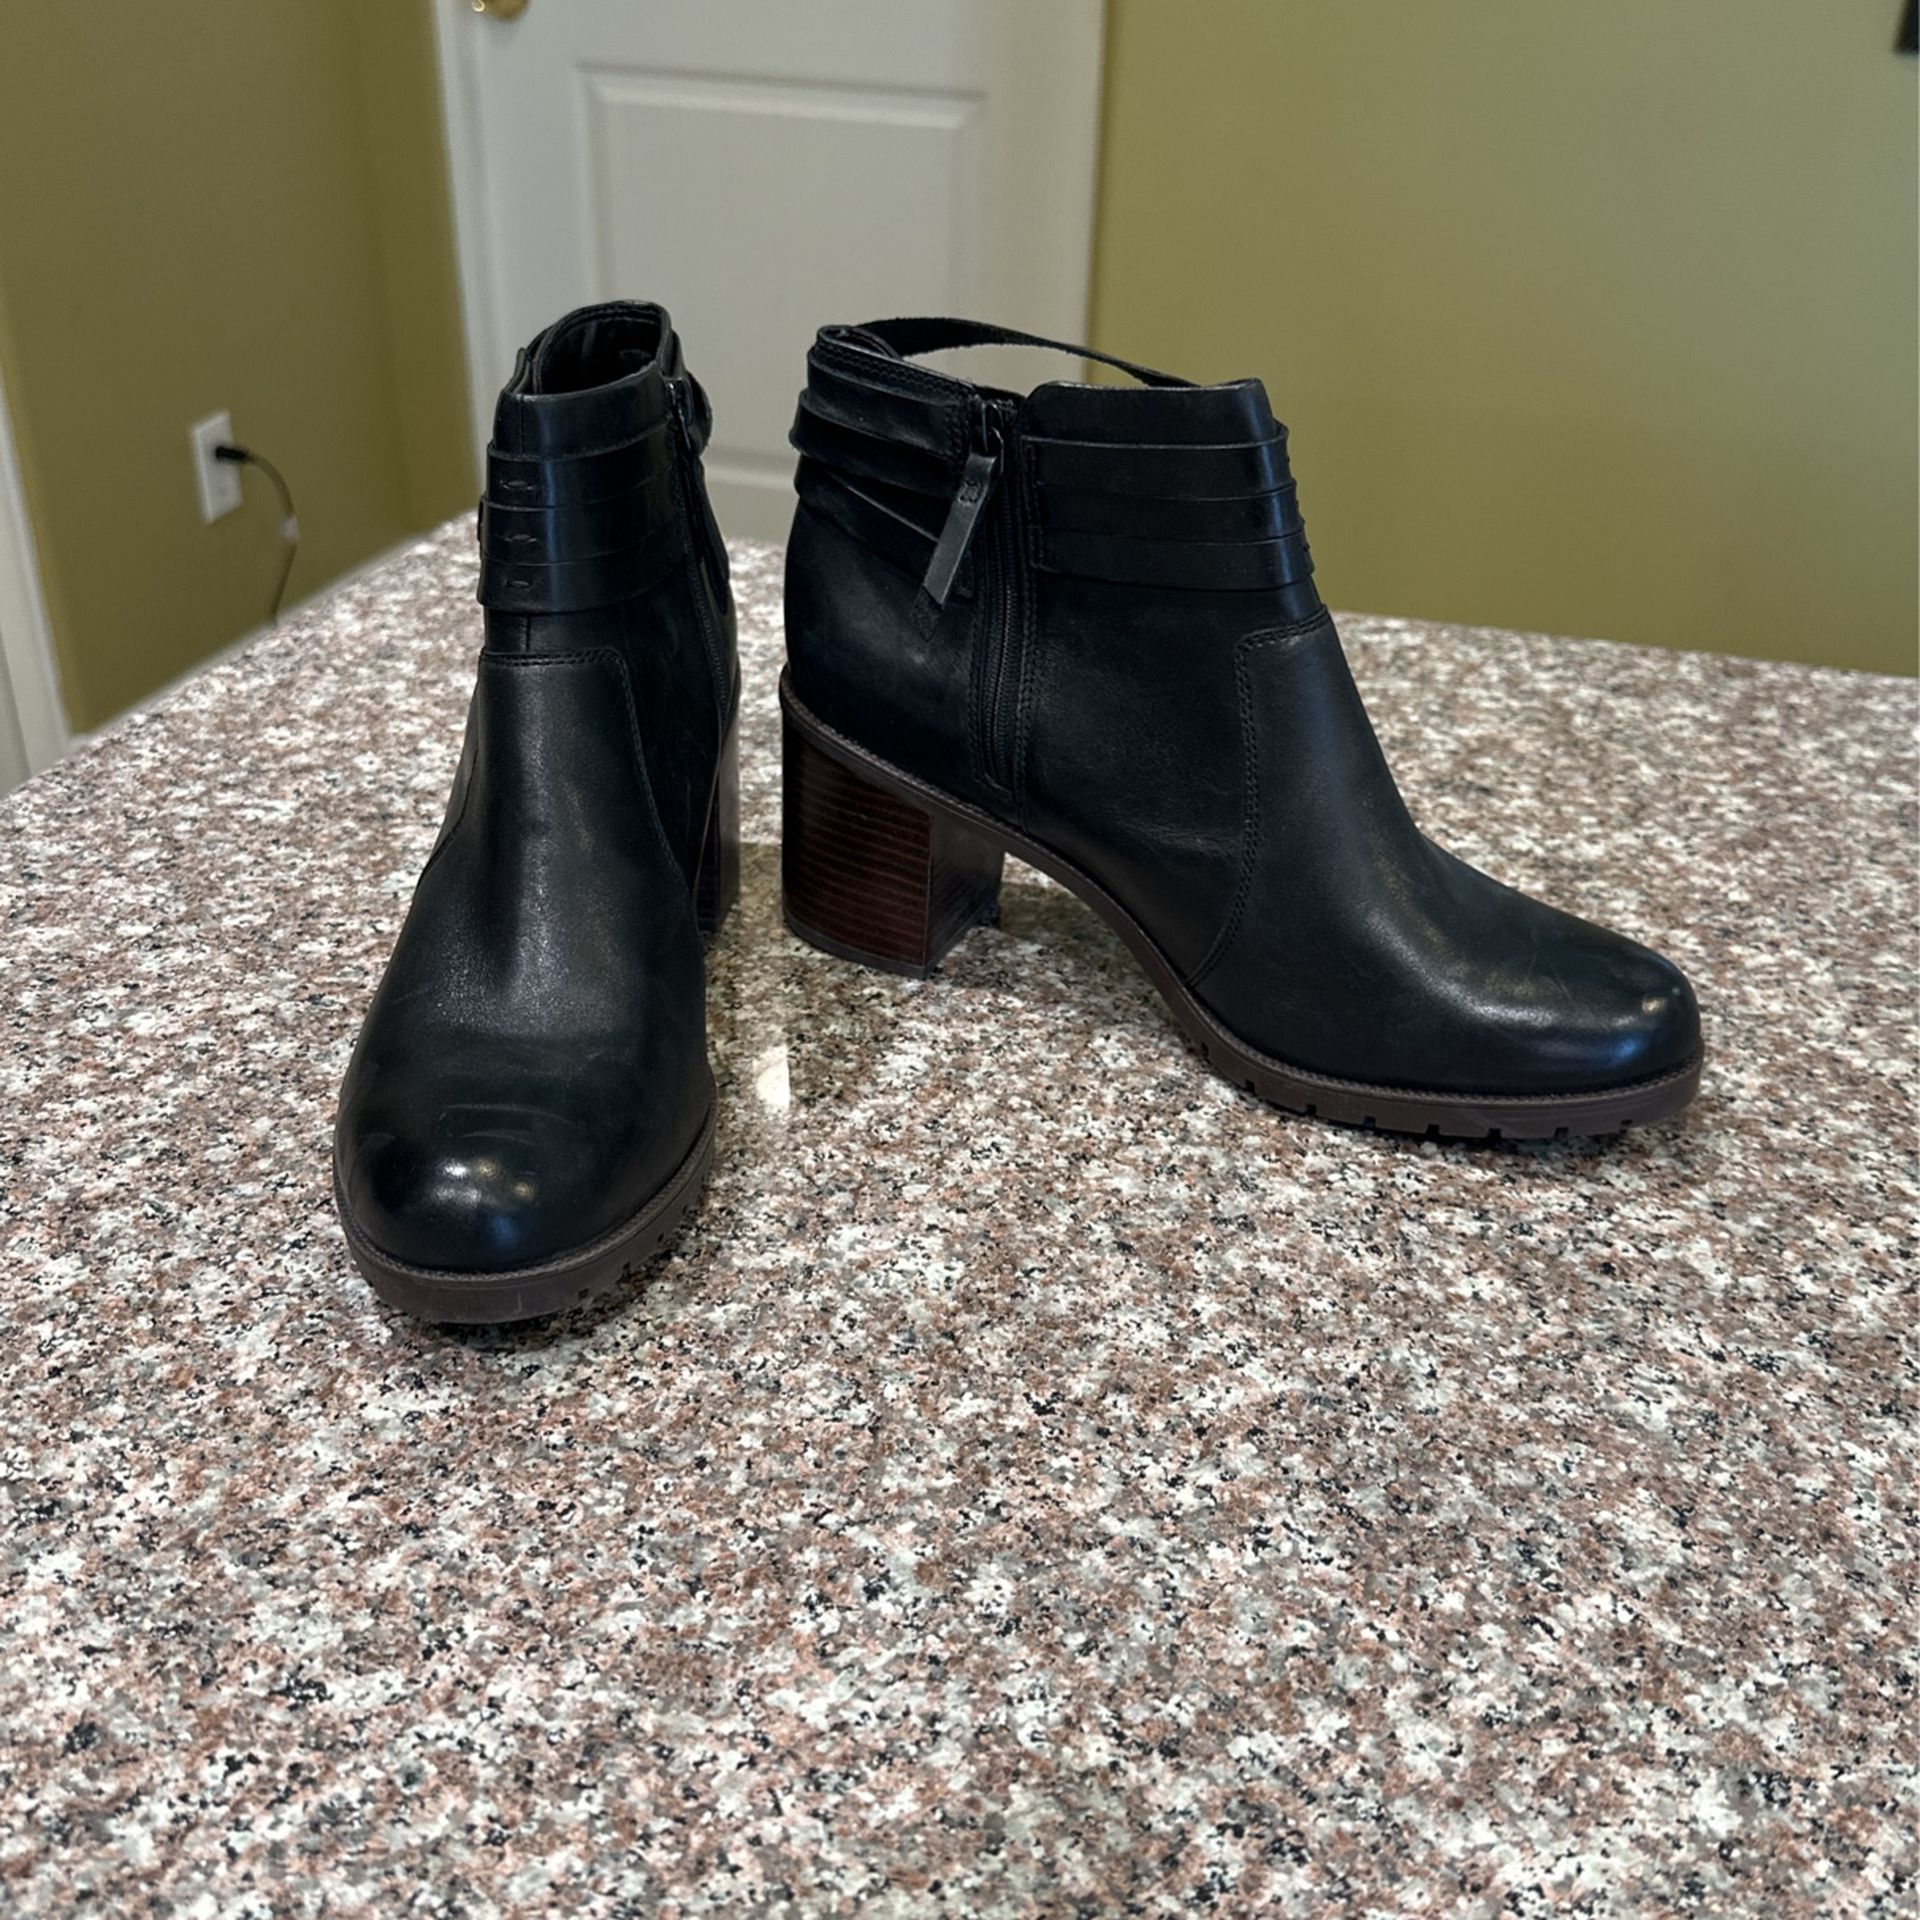 Clarks Artisan “Malvet Maria” Size 12 Black Leather Ankle Boot